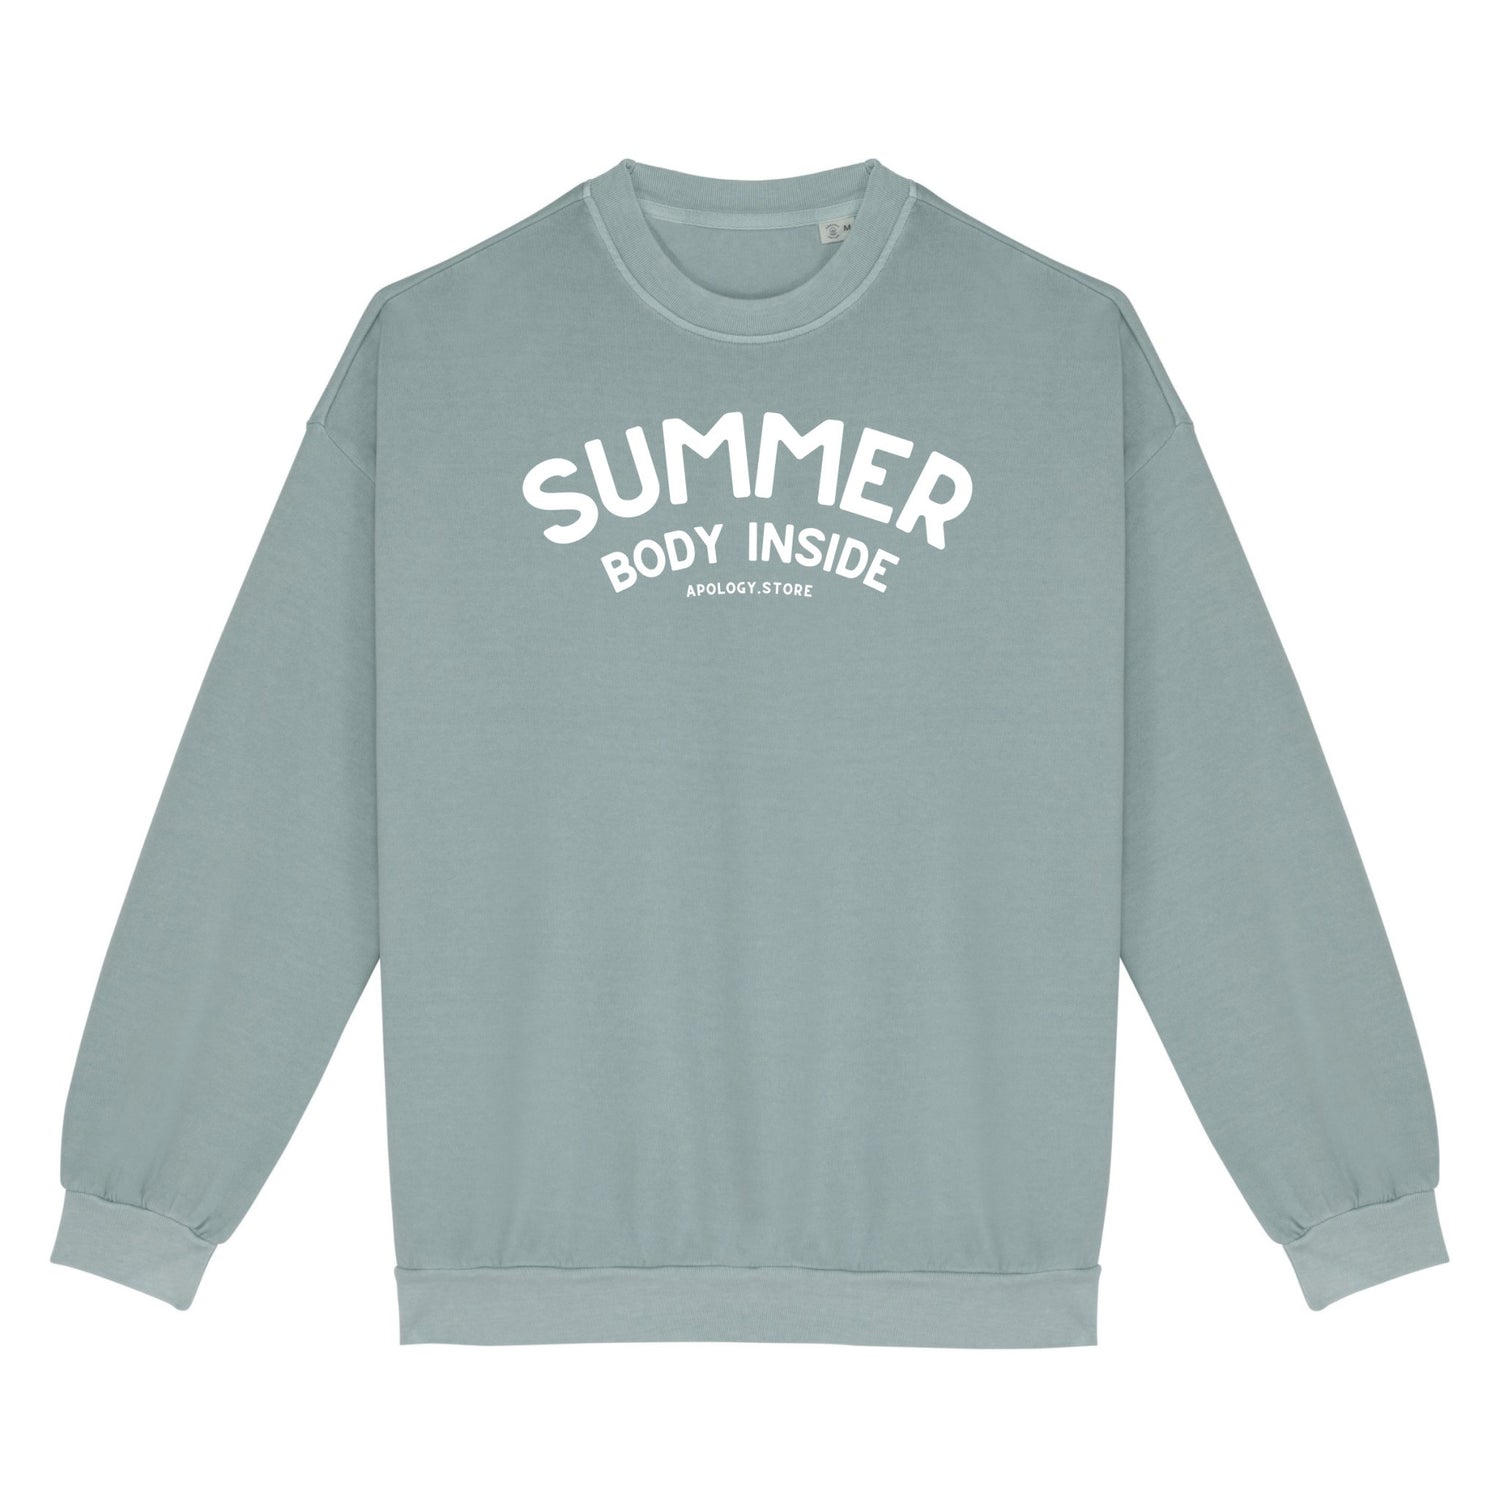 Sweat-shirt Summer Body Inside - Fabriqué au Portugal XS Vert_jade - Imprimé en France